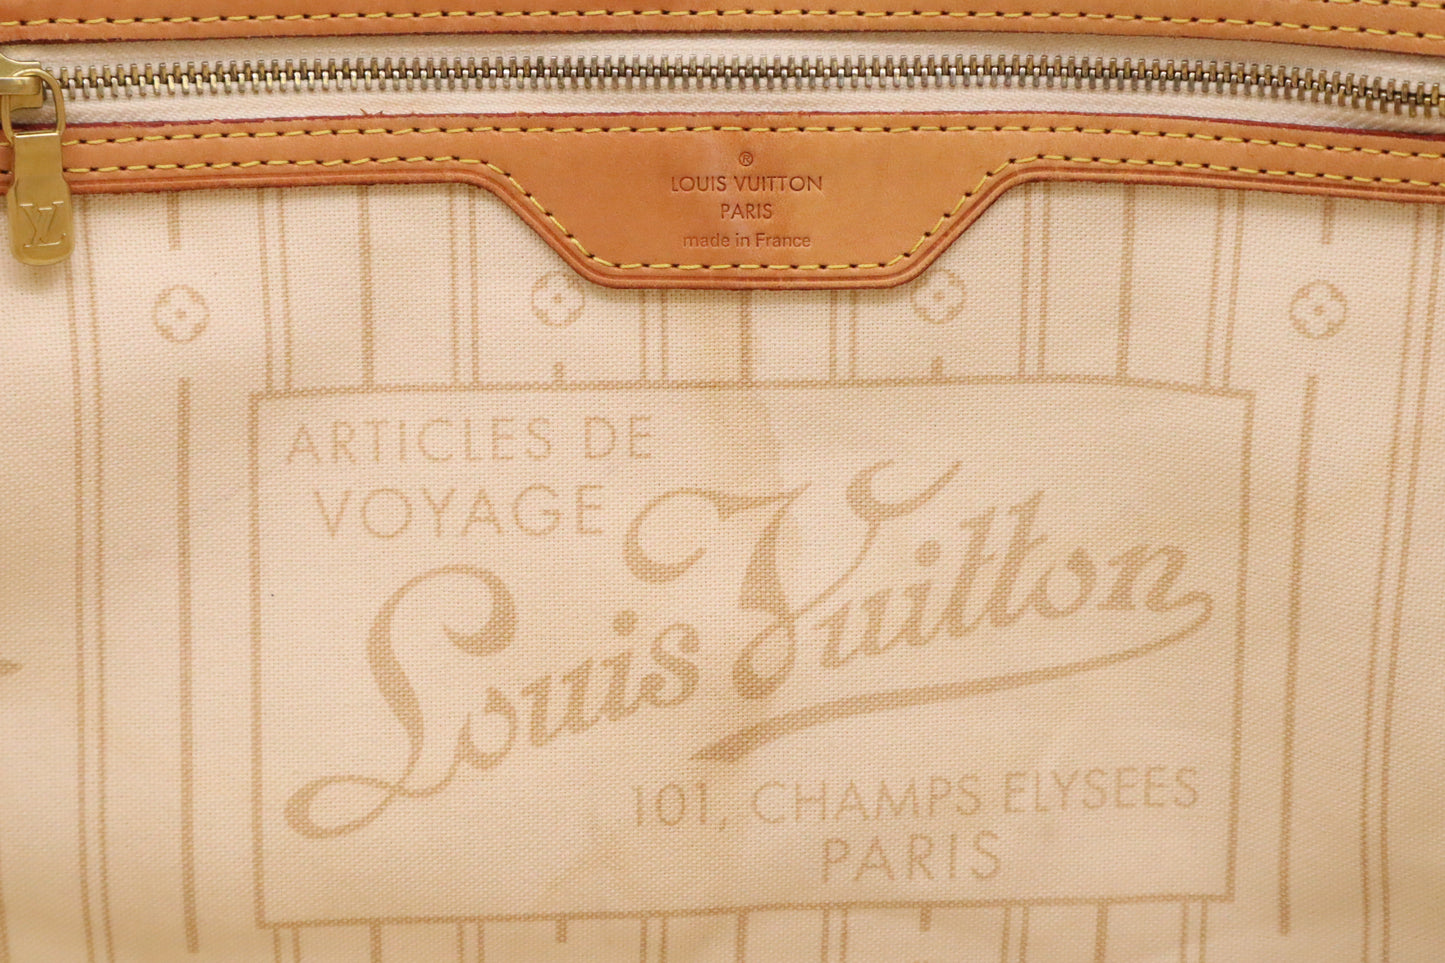 Louis Vuitton Neverfull GM in Damier Azur Canvas